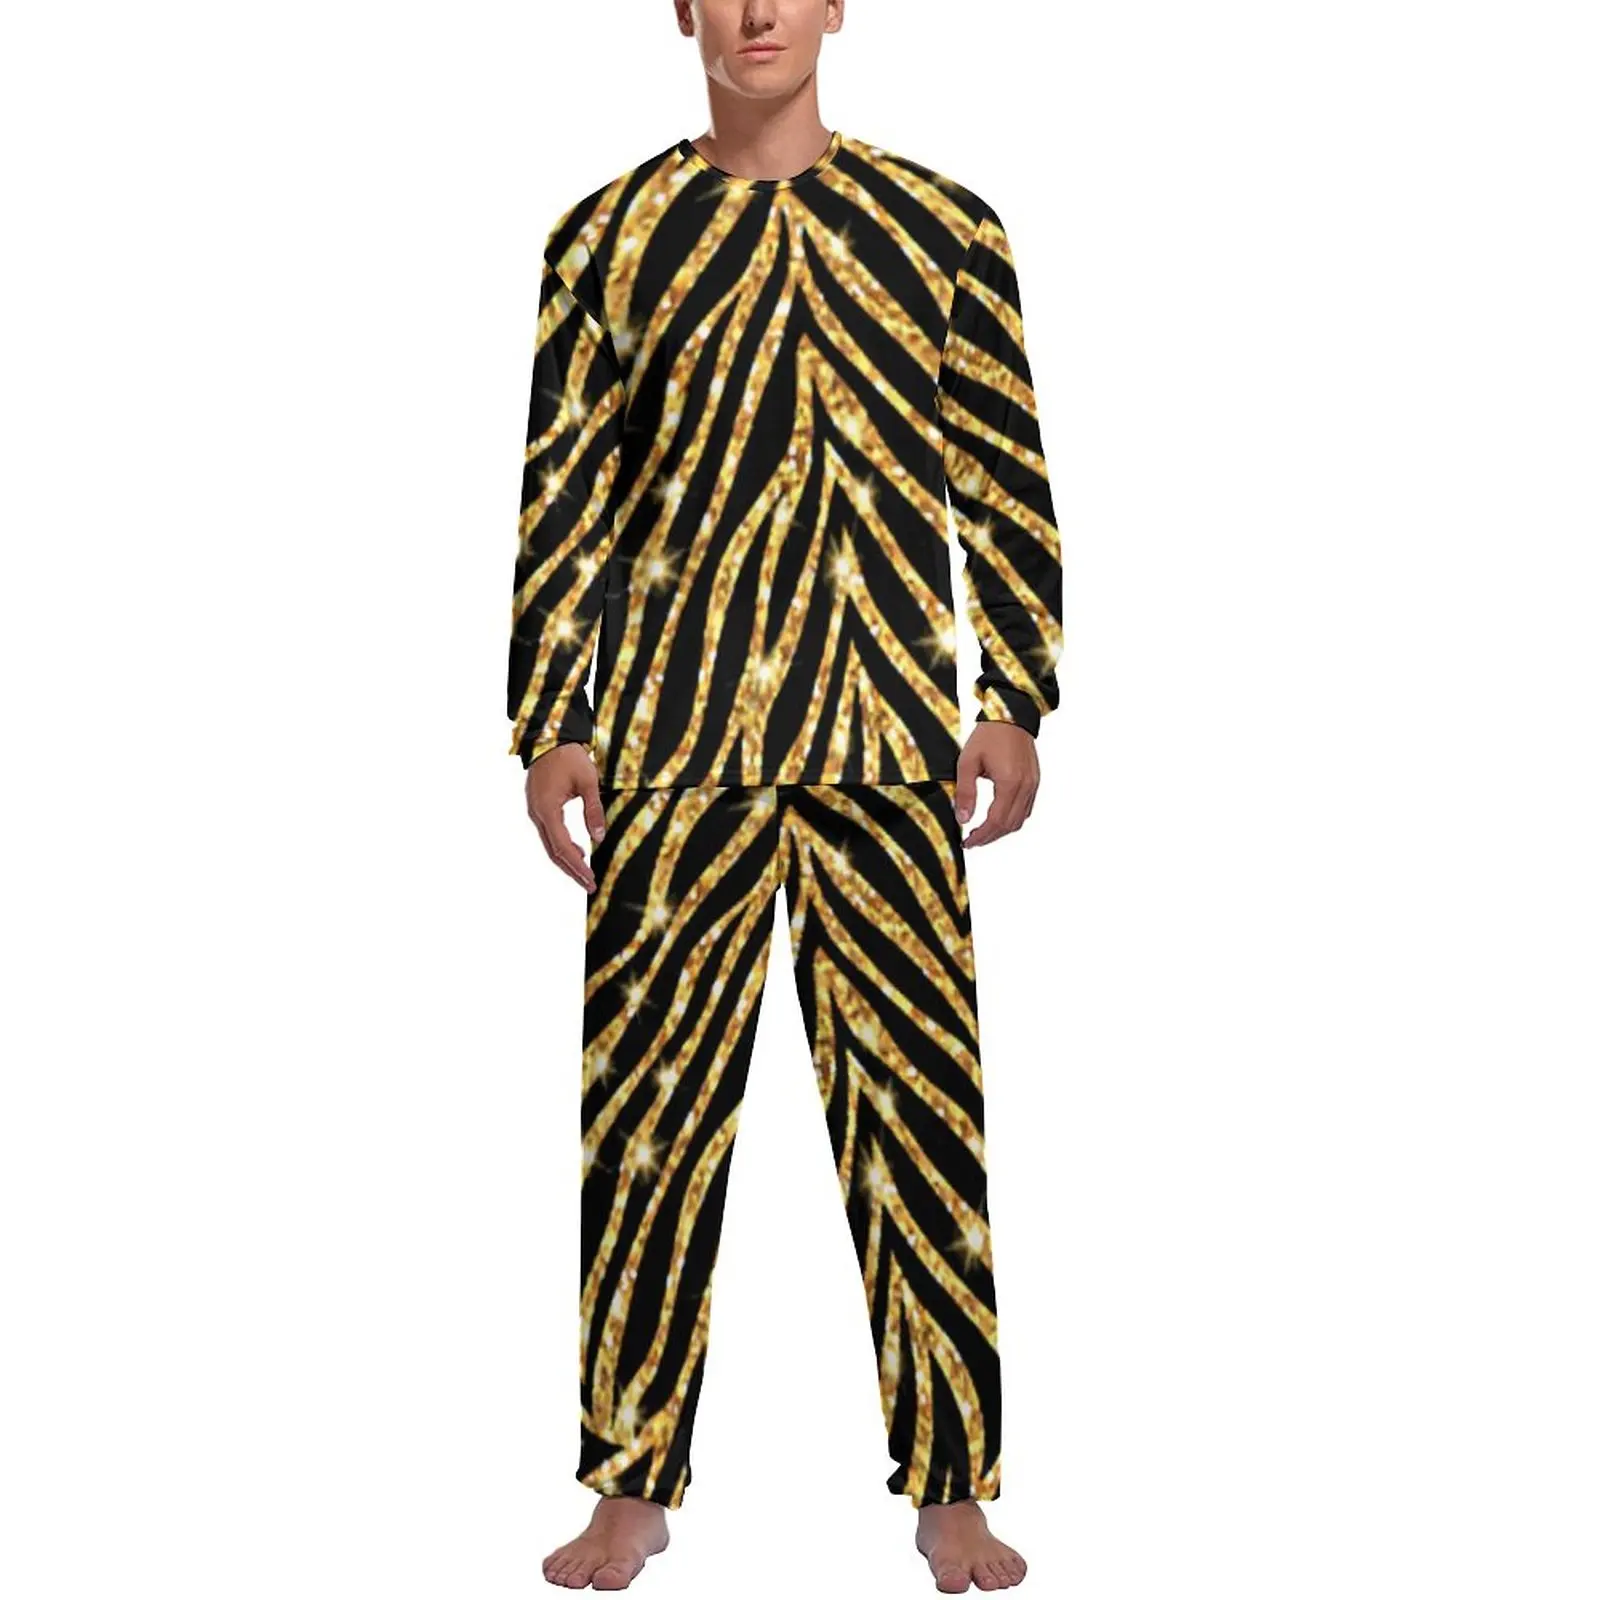 Black And Gold Zebra Pajamas Spring 2 Pieces Animal Print Cute Pajama Sets Mens Long Sleeves Bedroom Design Home Suit